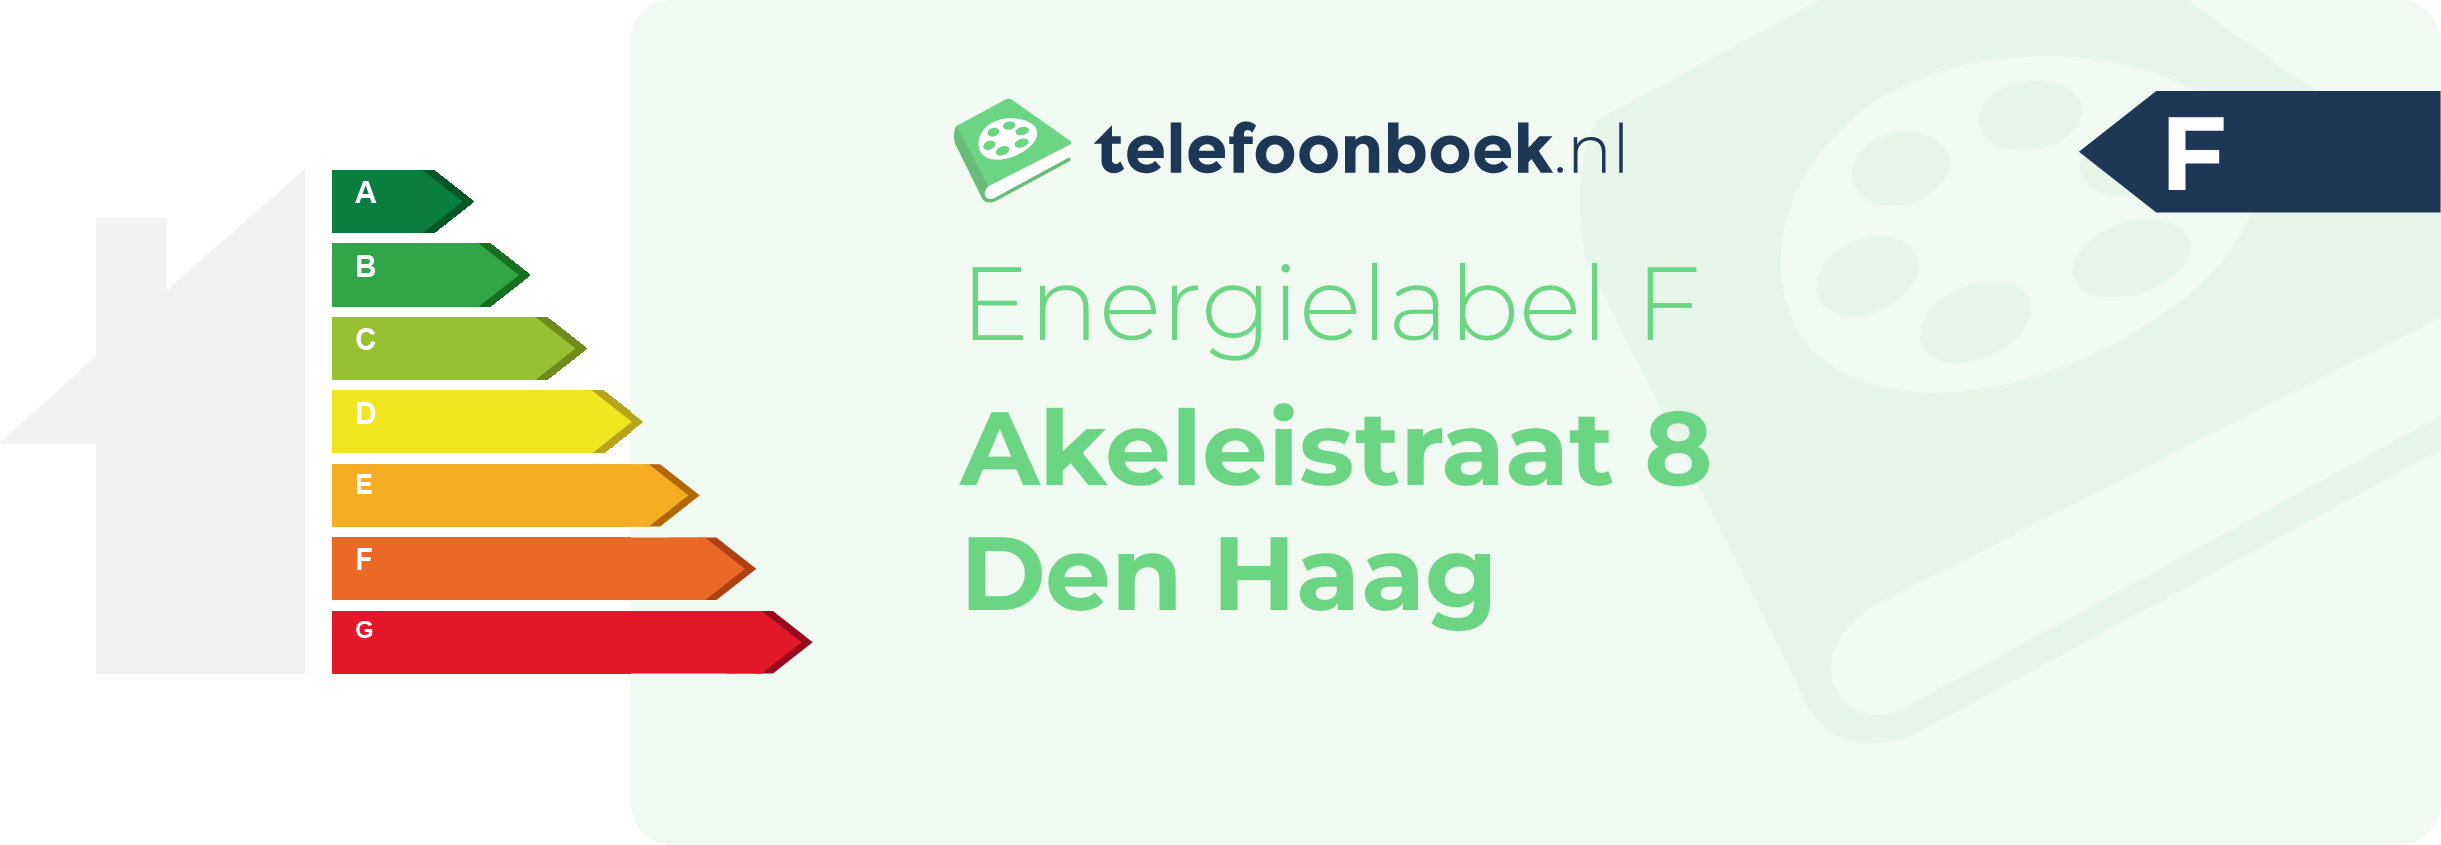 Energielabel Akeleistraat 8 Den Haag